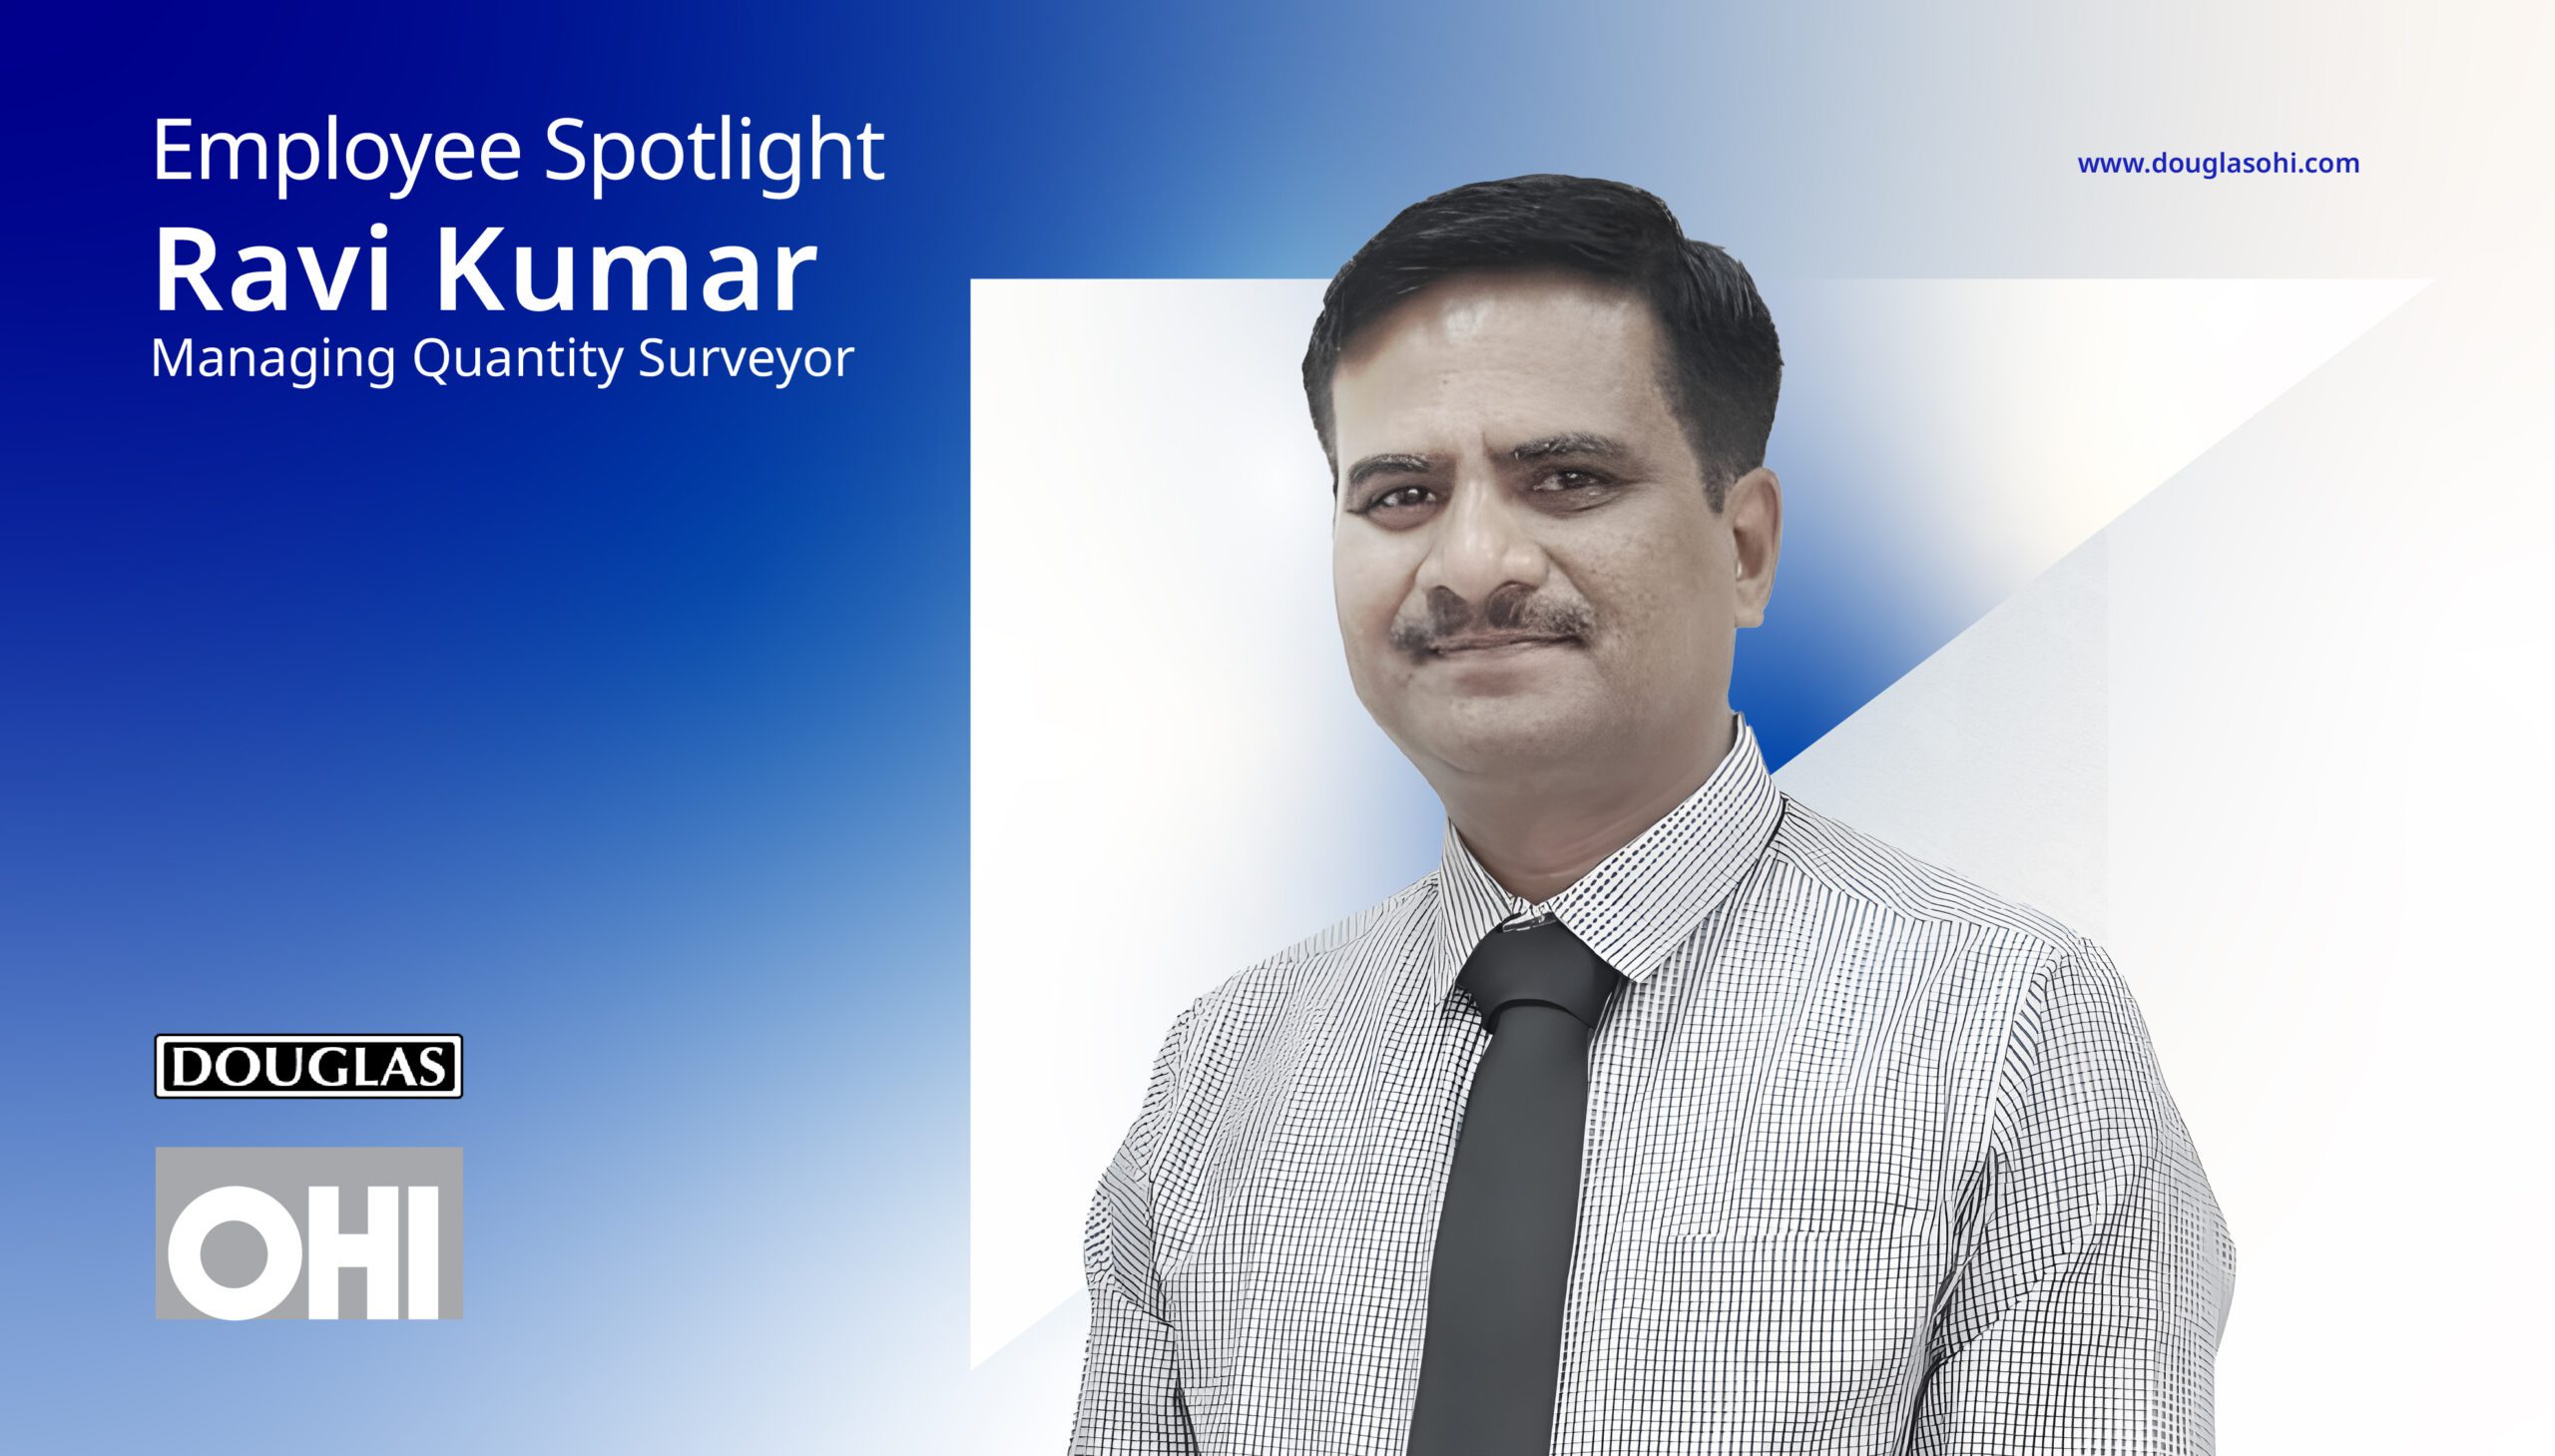 Employee Spotlight | Ravi Kumar, Managing Quantity Surveyor at Douglas OHI